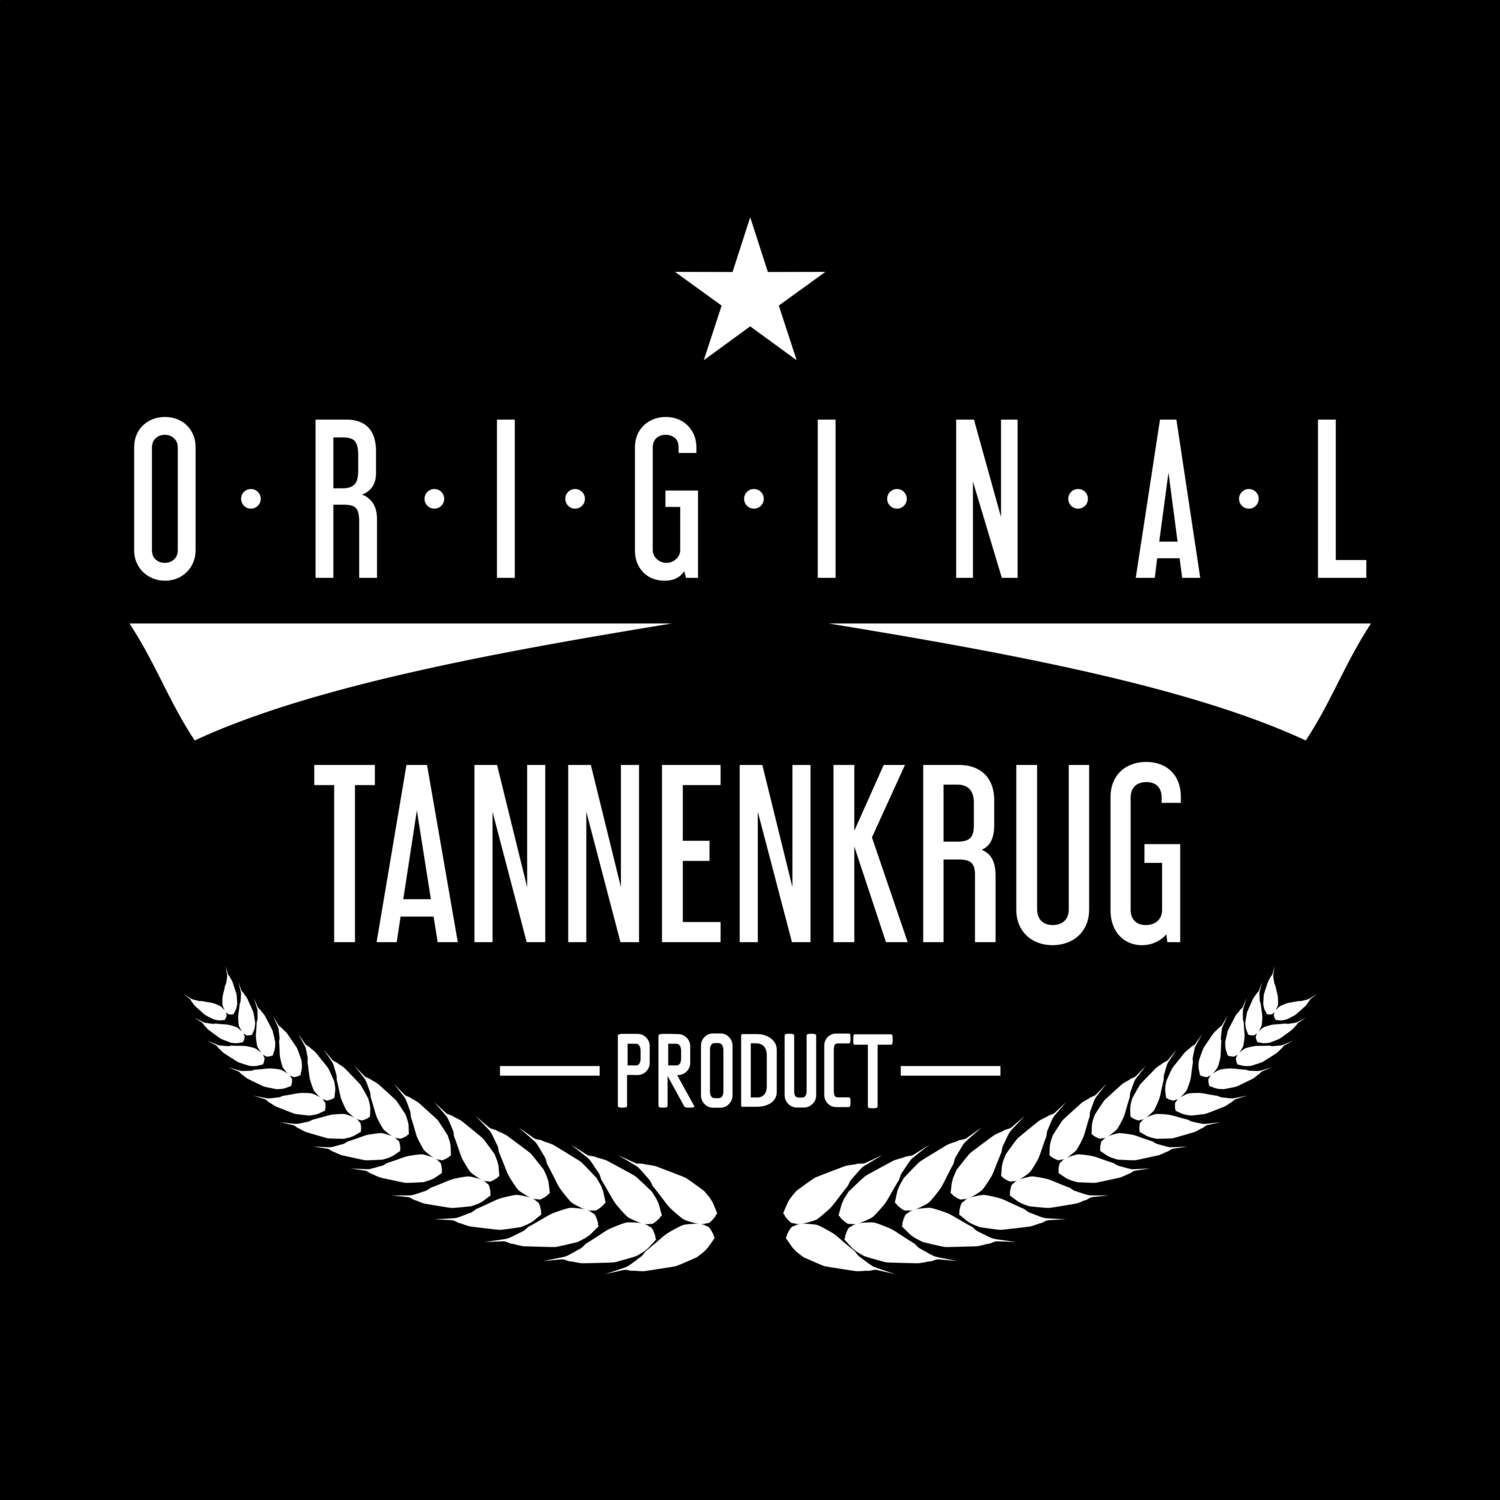 Tannenkrug T-Shirt »Original Product«